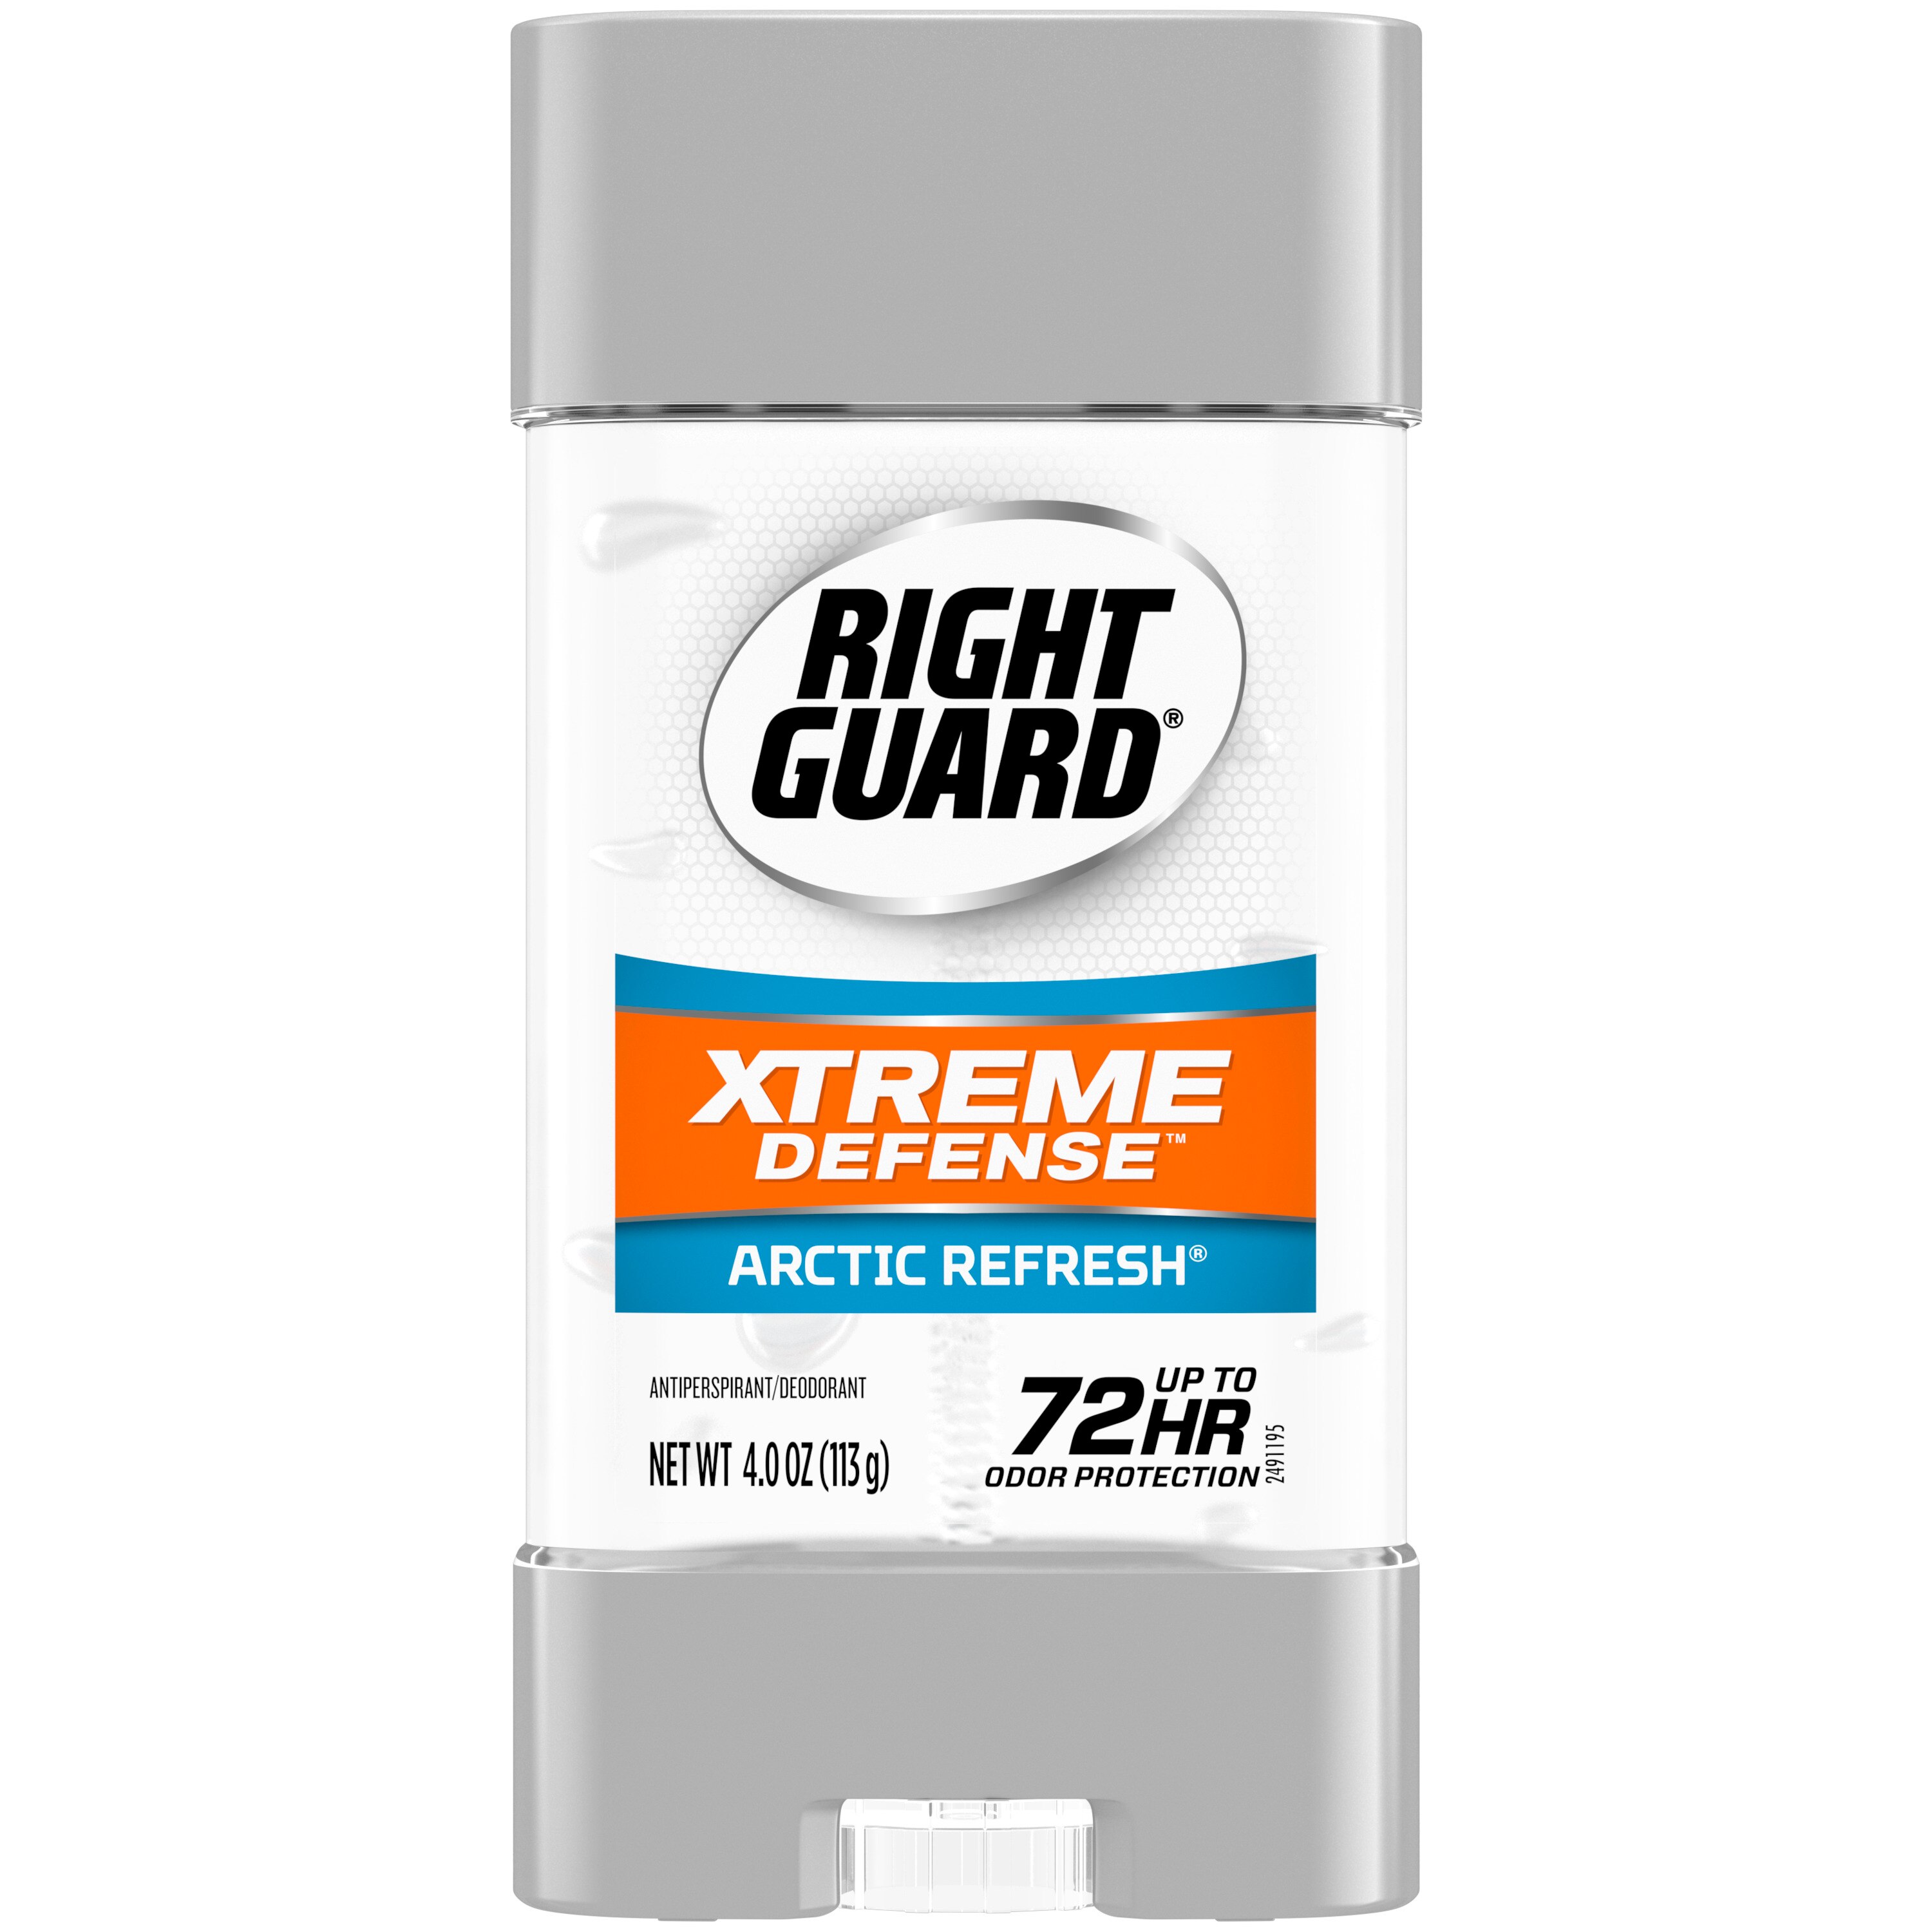 Right Guard Xtreme Defense 72-Hour Antiperspirant & Deodorant Stick, Arctic Refresh, 4 Oz , CVS